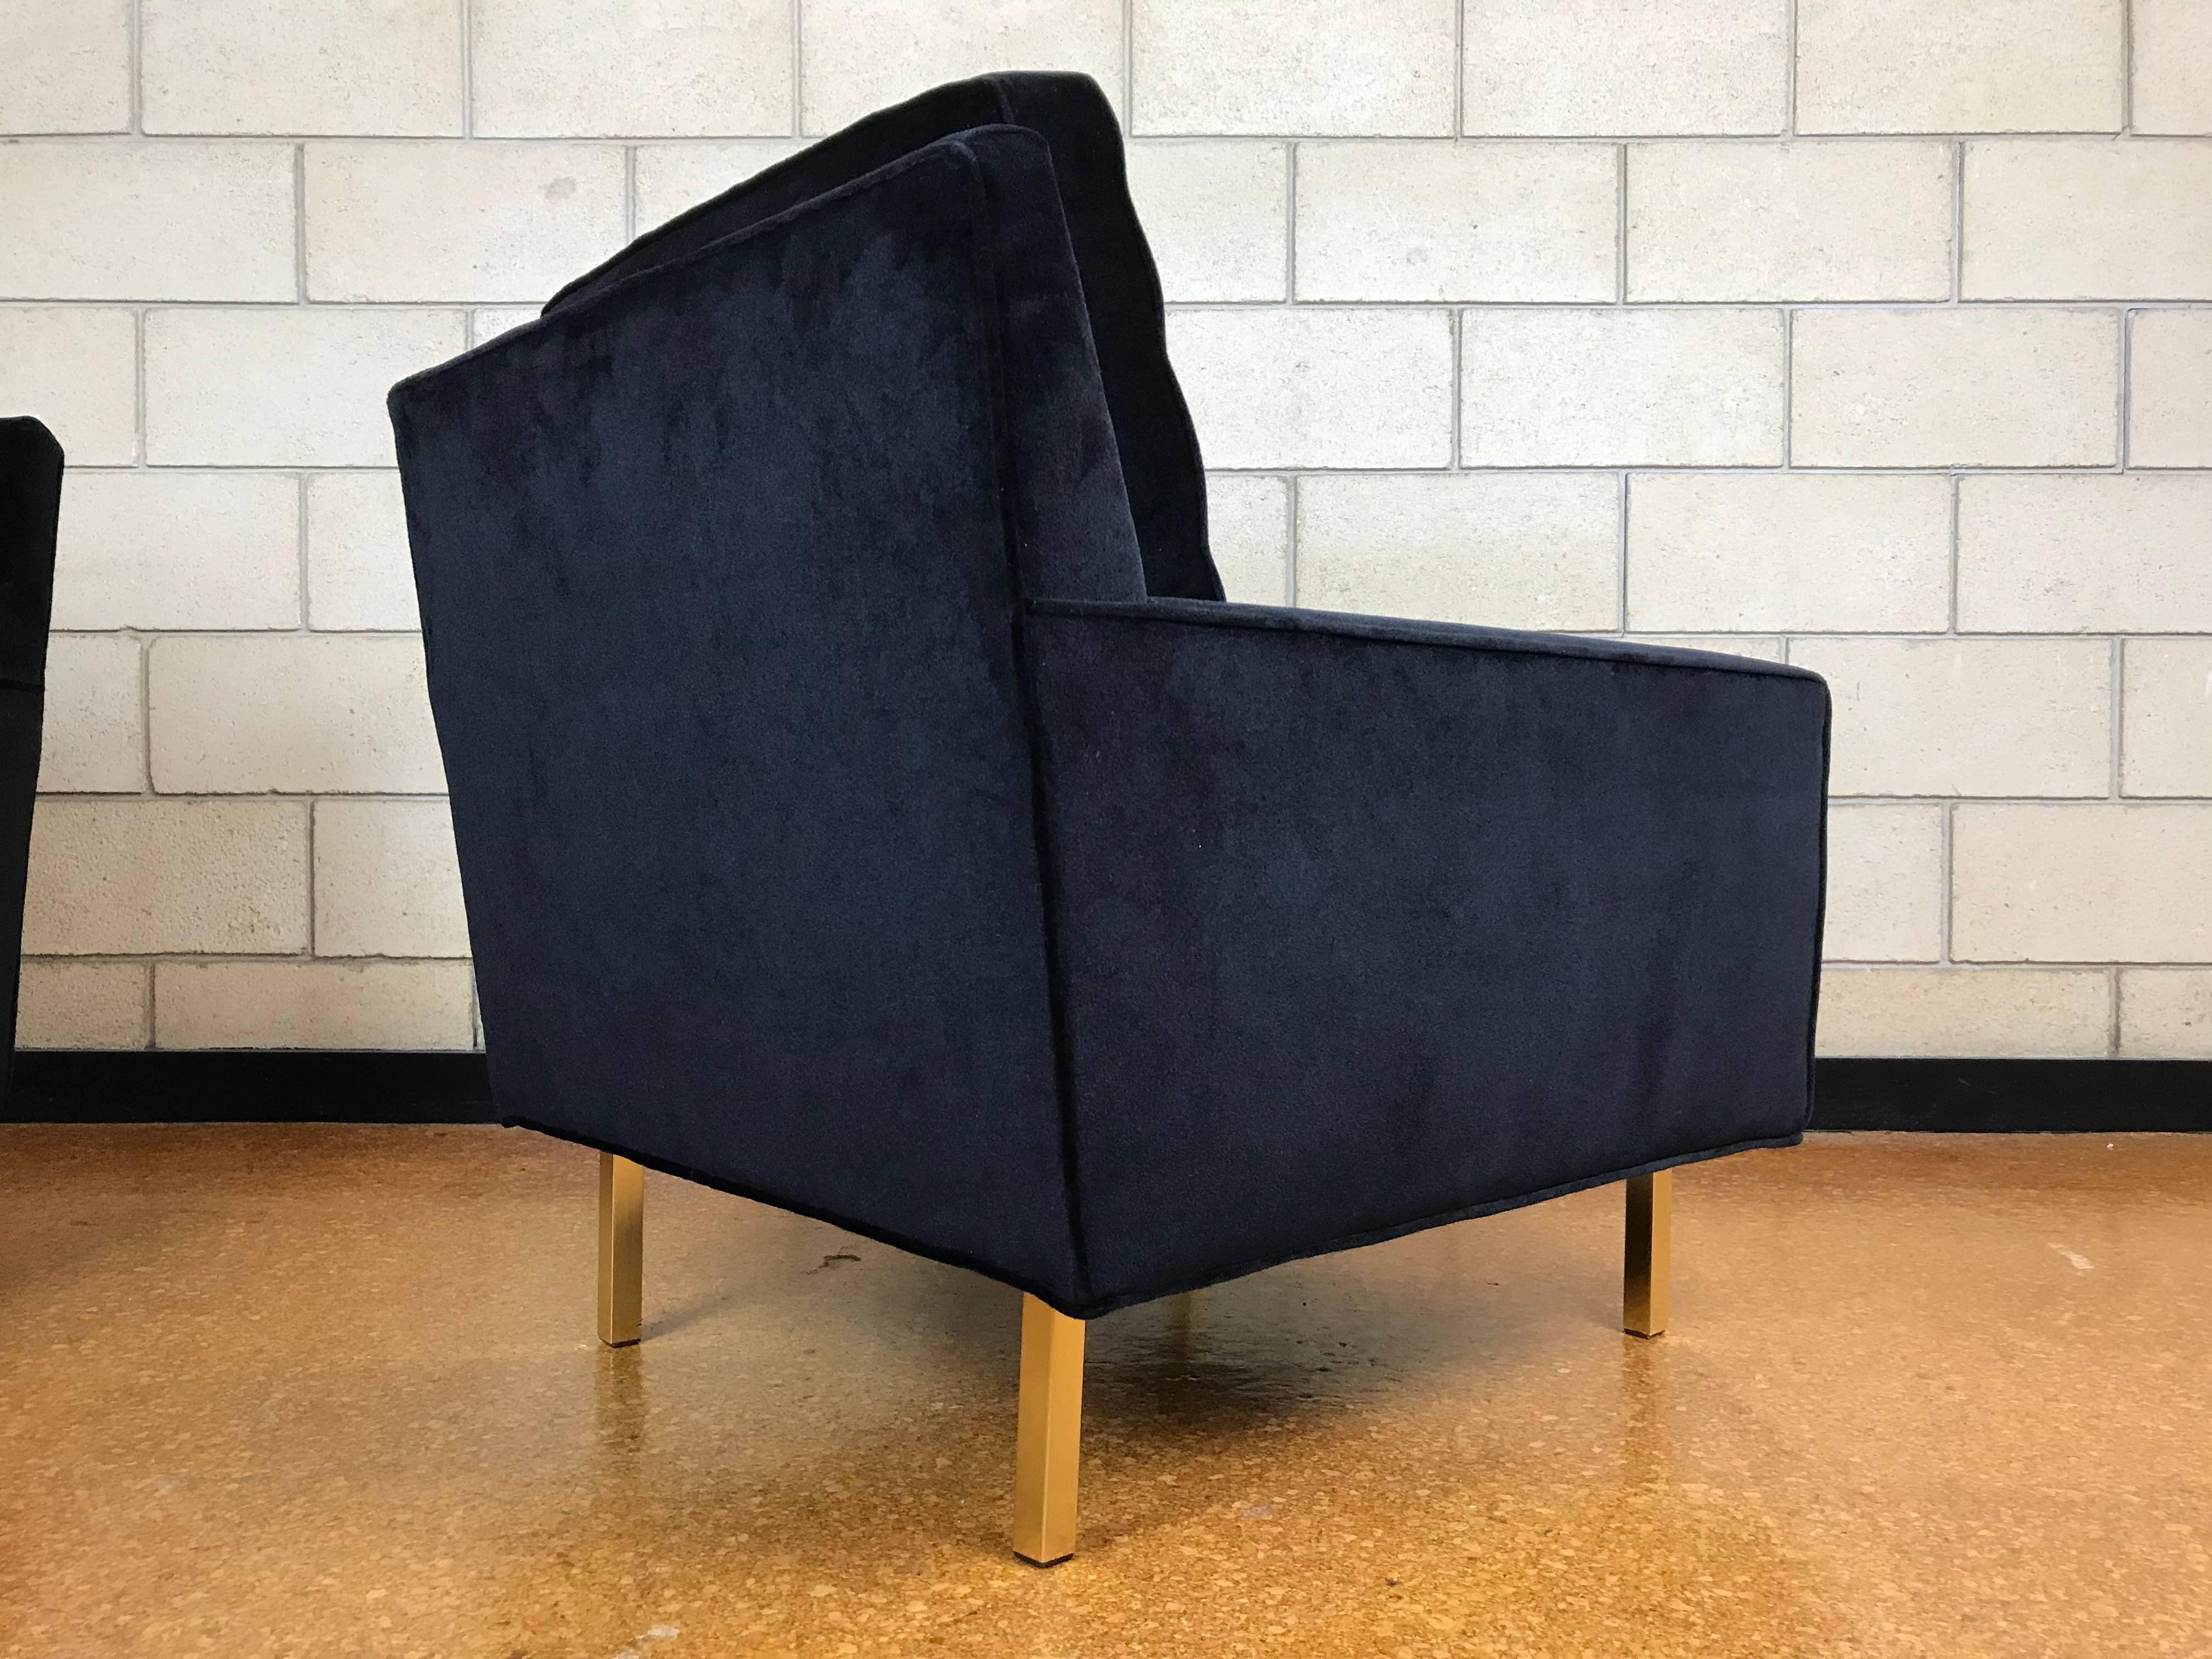 Pair of Mid-Century Modern Tuxedo Lounge Chairs in Black Velvet with Brass Legs 1